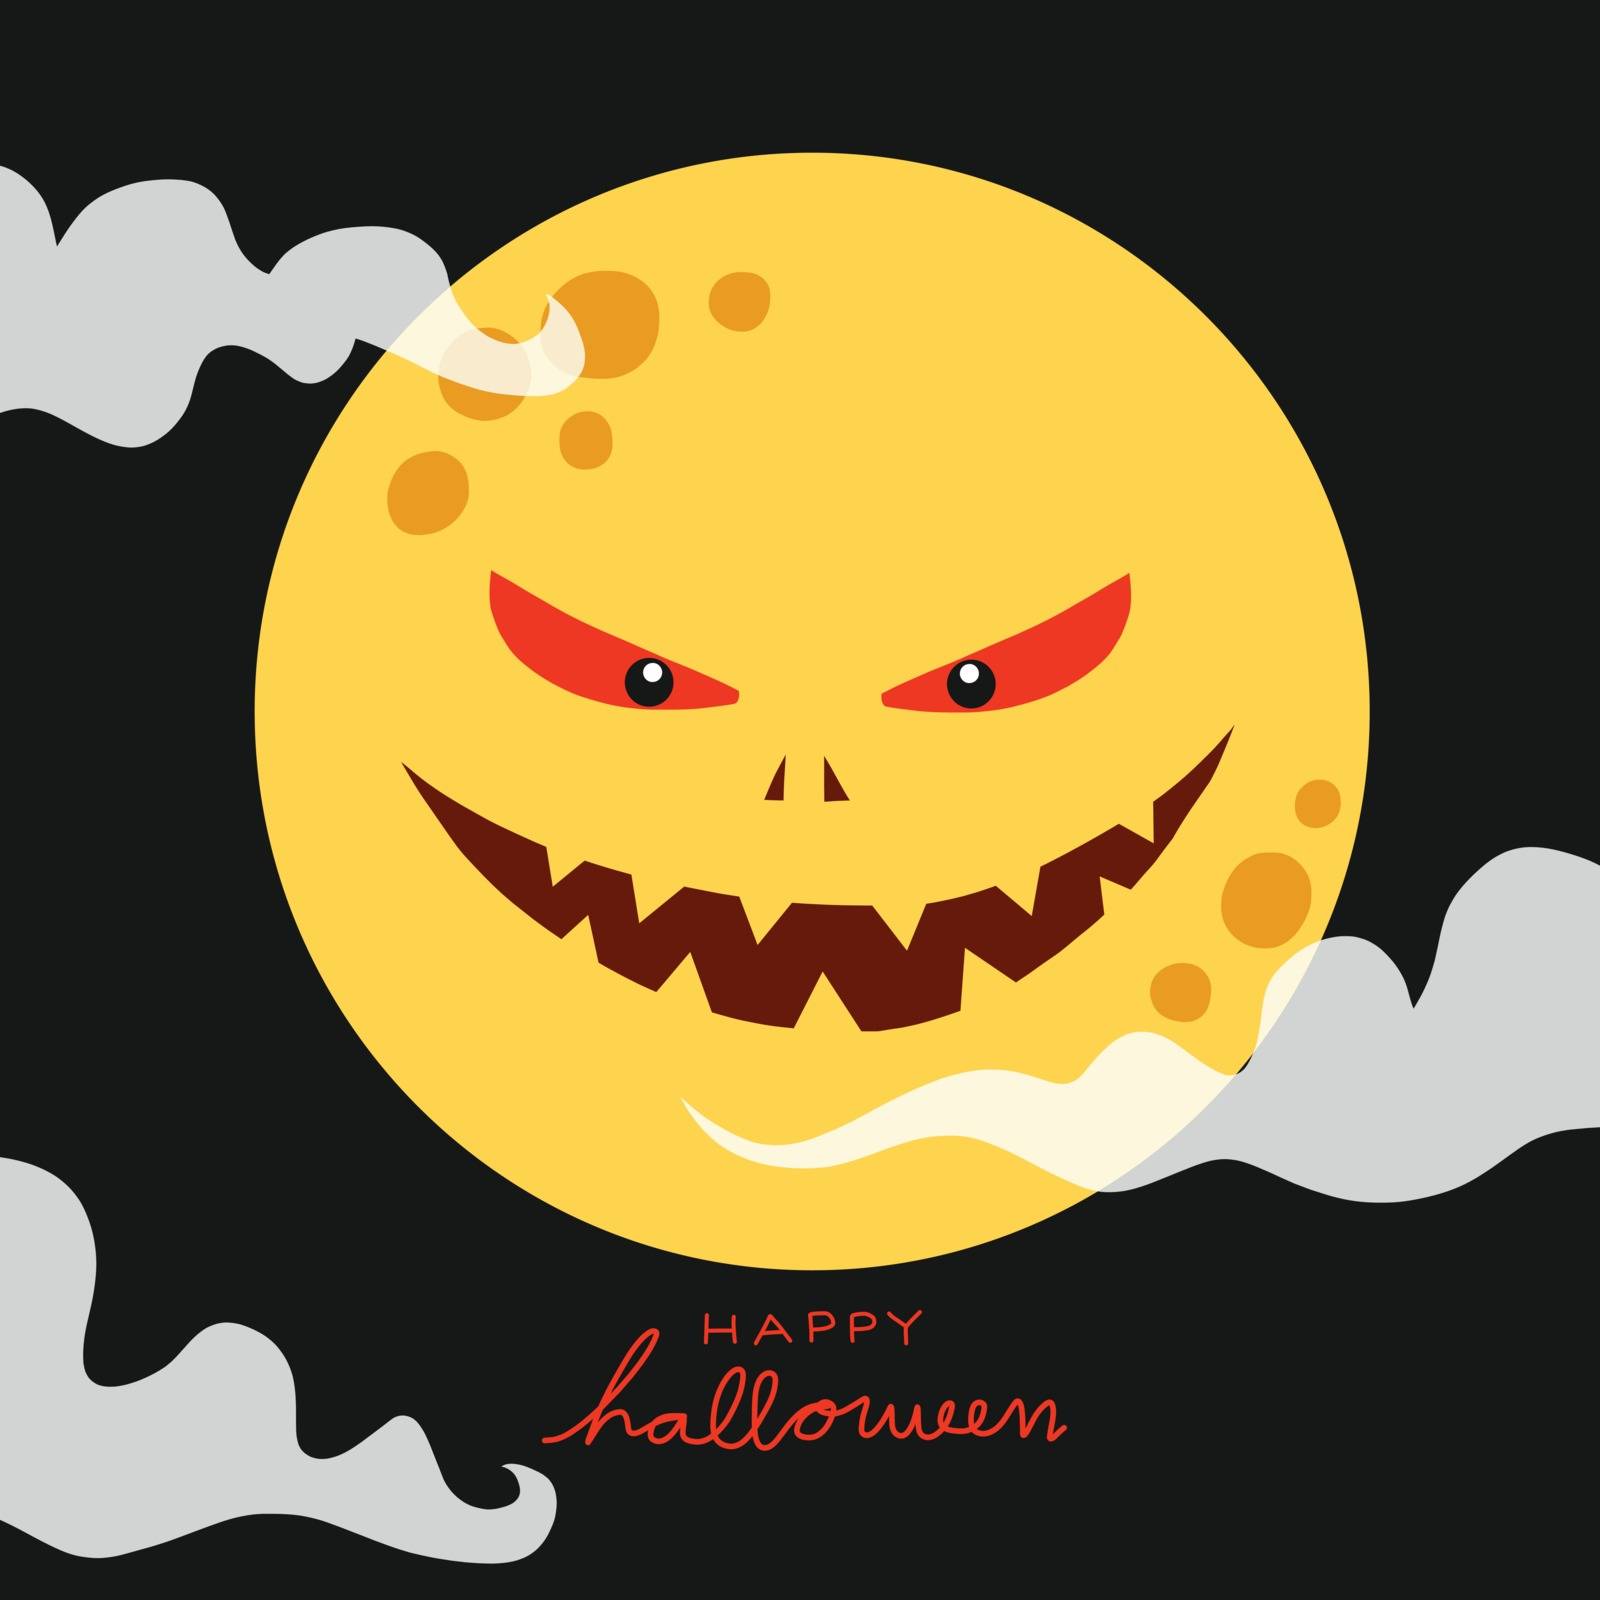 Full moon monster happy Halloween night cartoon vector illustration by Yoopho